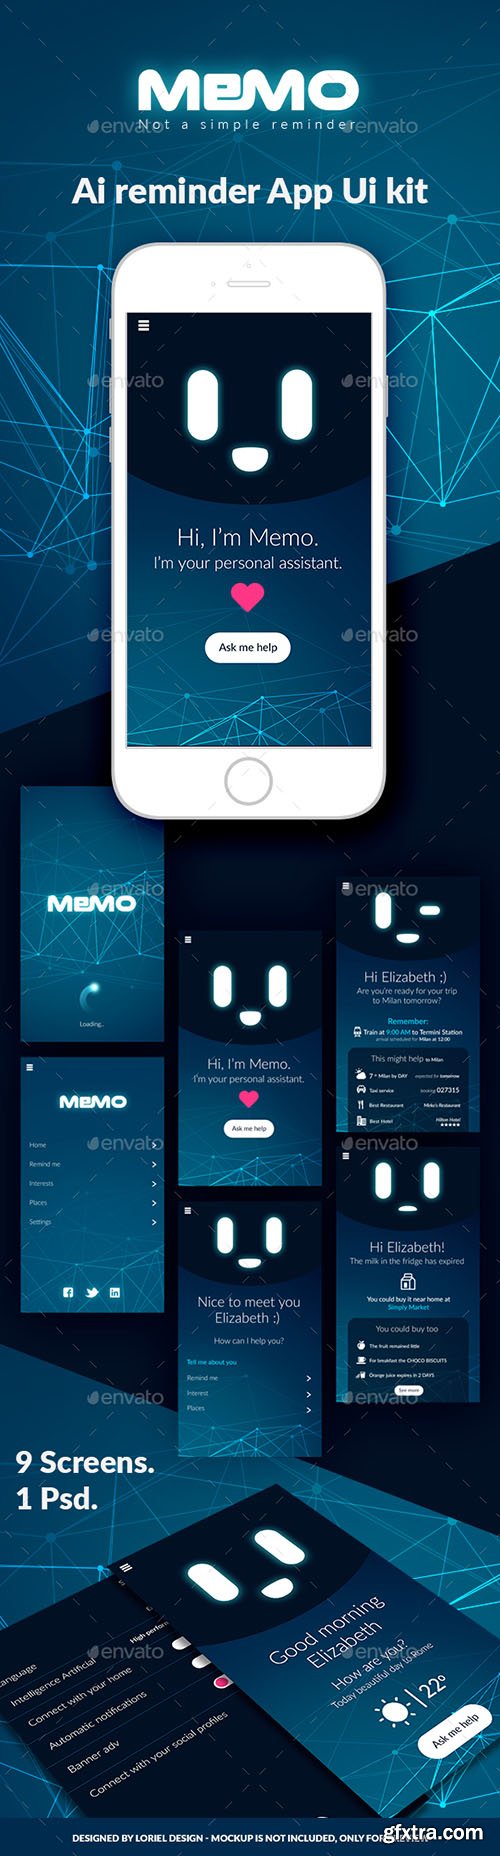 GR - Memo - Mobile AI Reminder App Ui kit 21297734